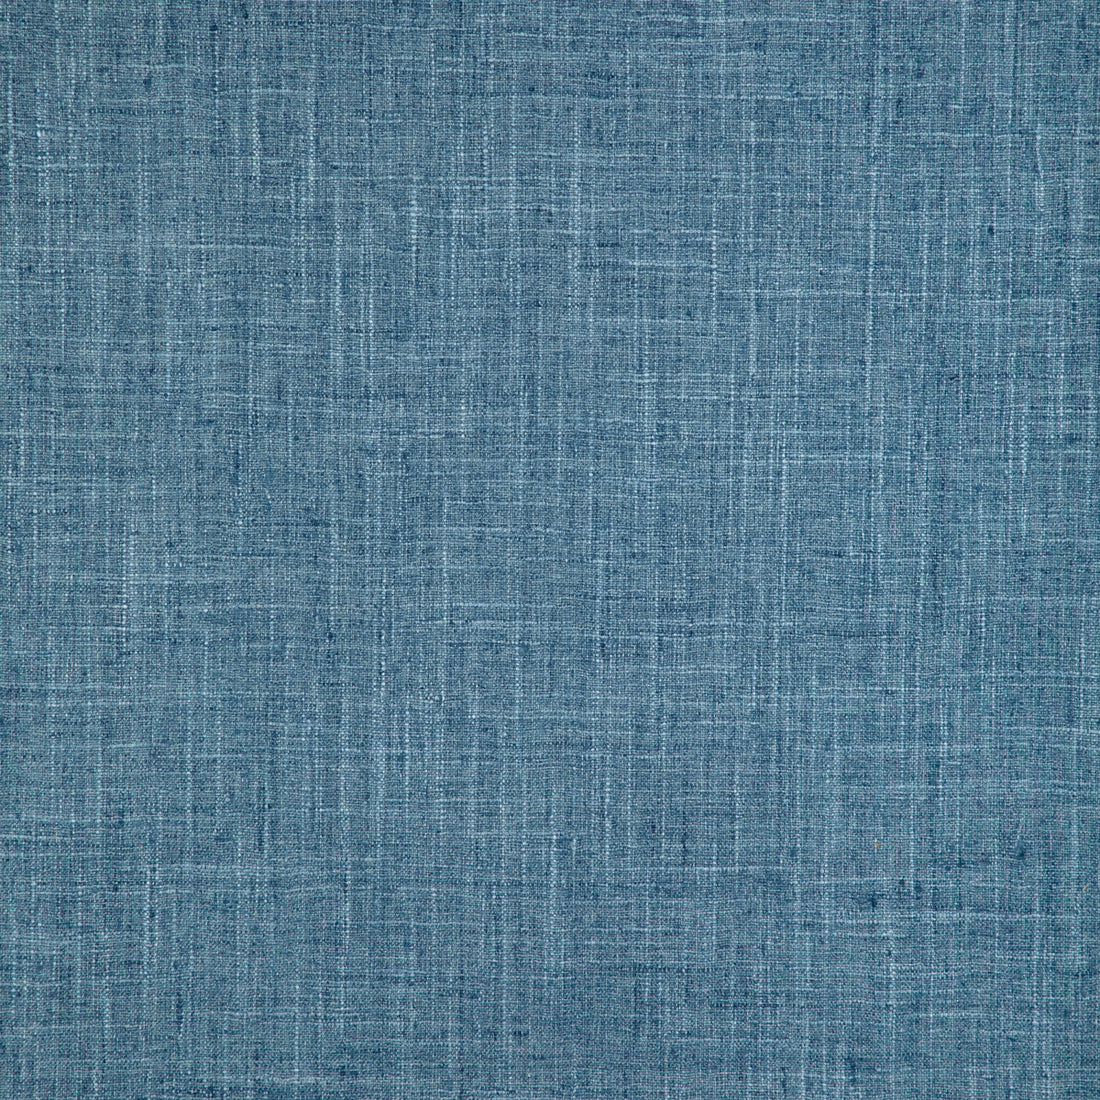 Kravet Smart fabric in 34983-55 color - pattern 34983.55.0 - by Kravet Smart